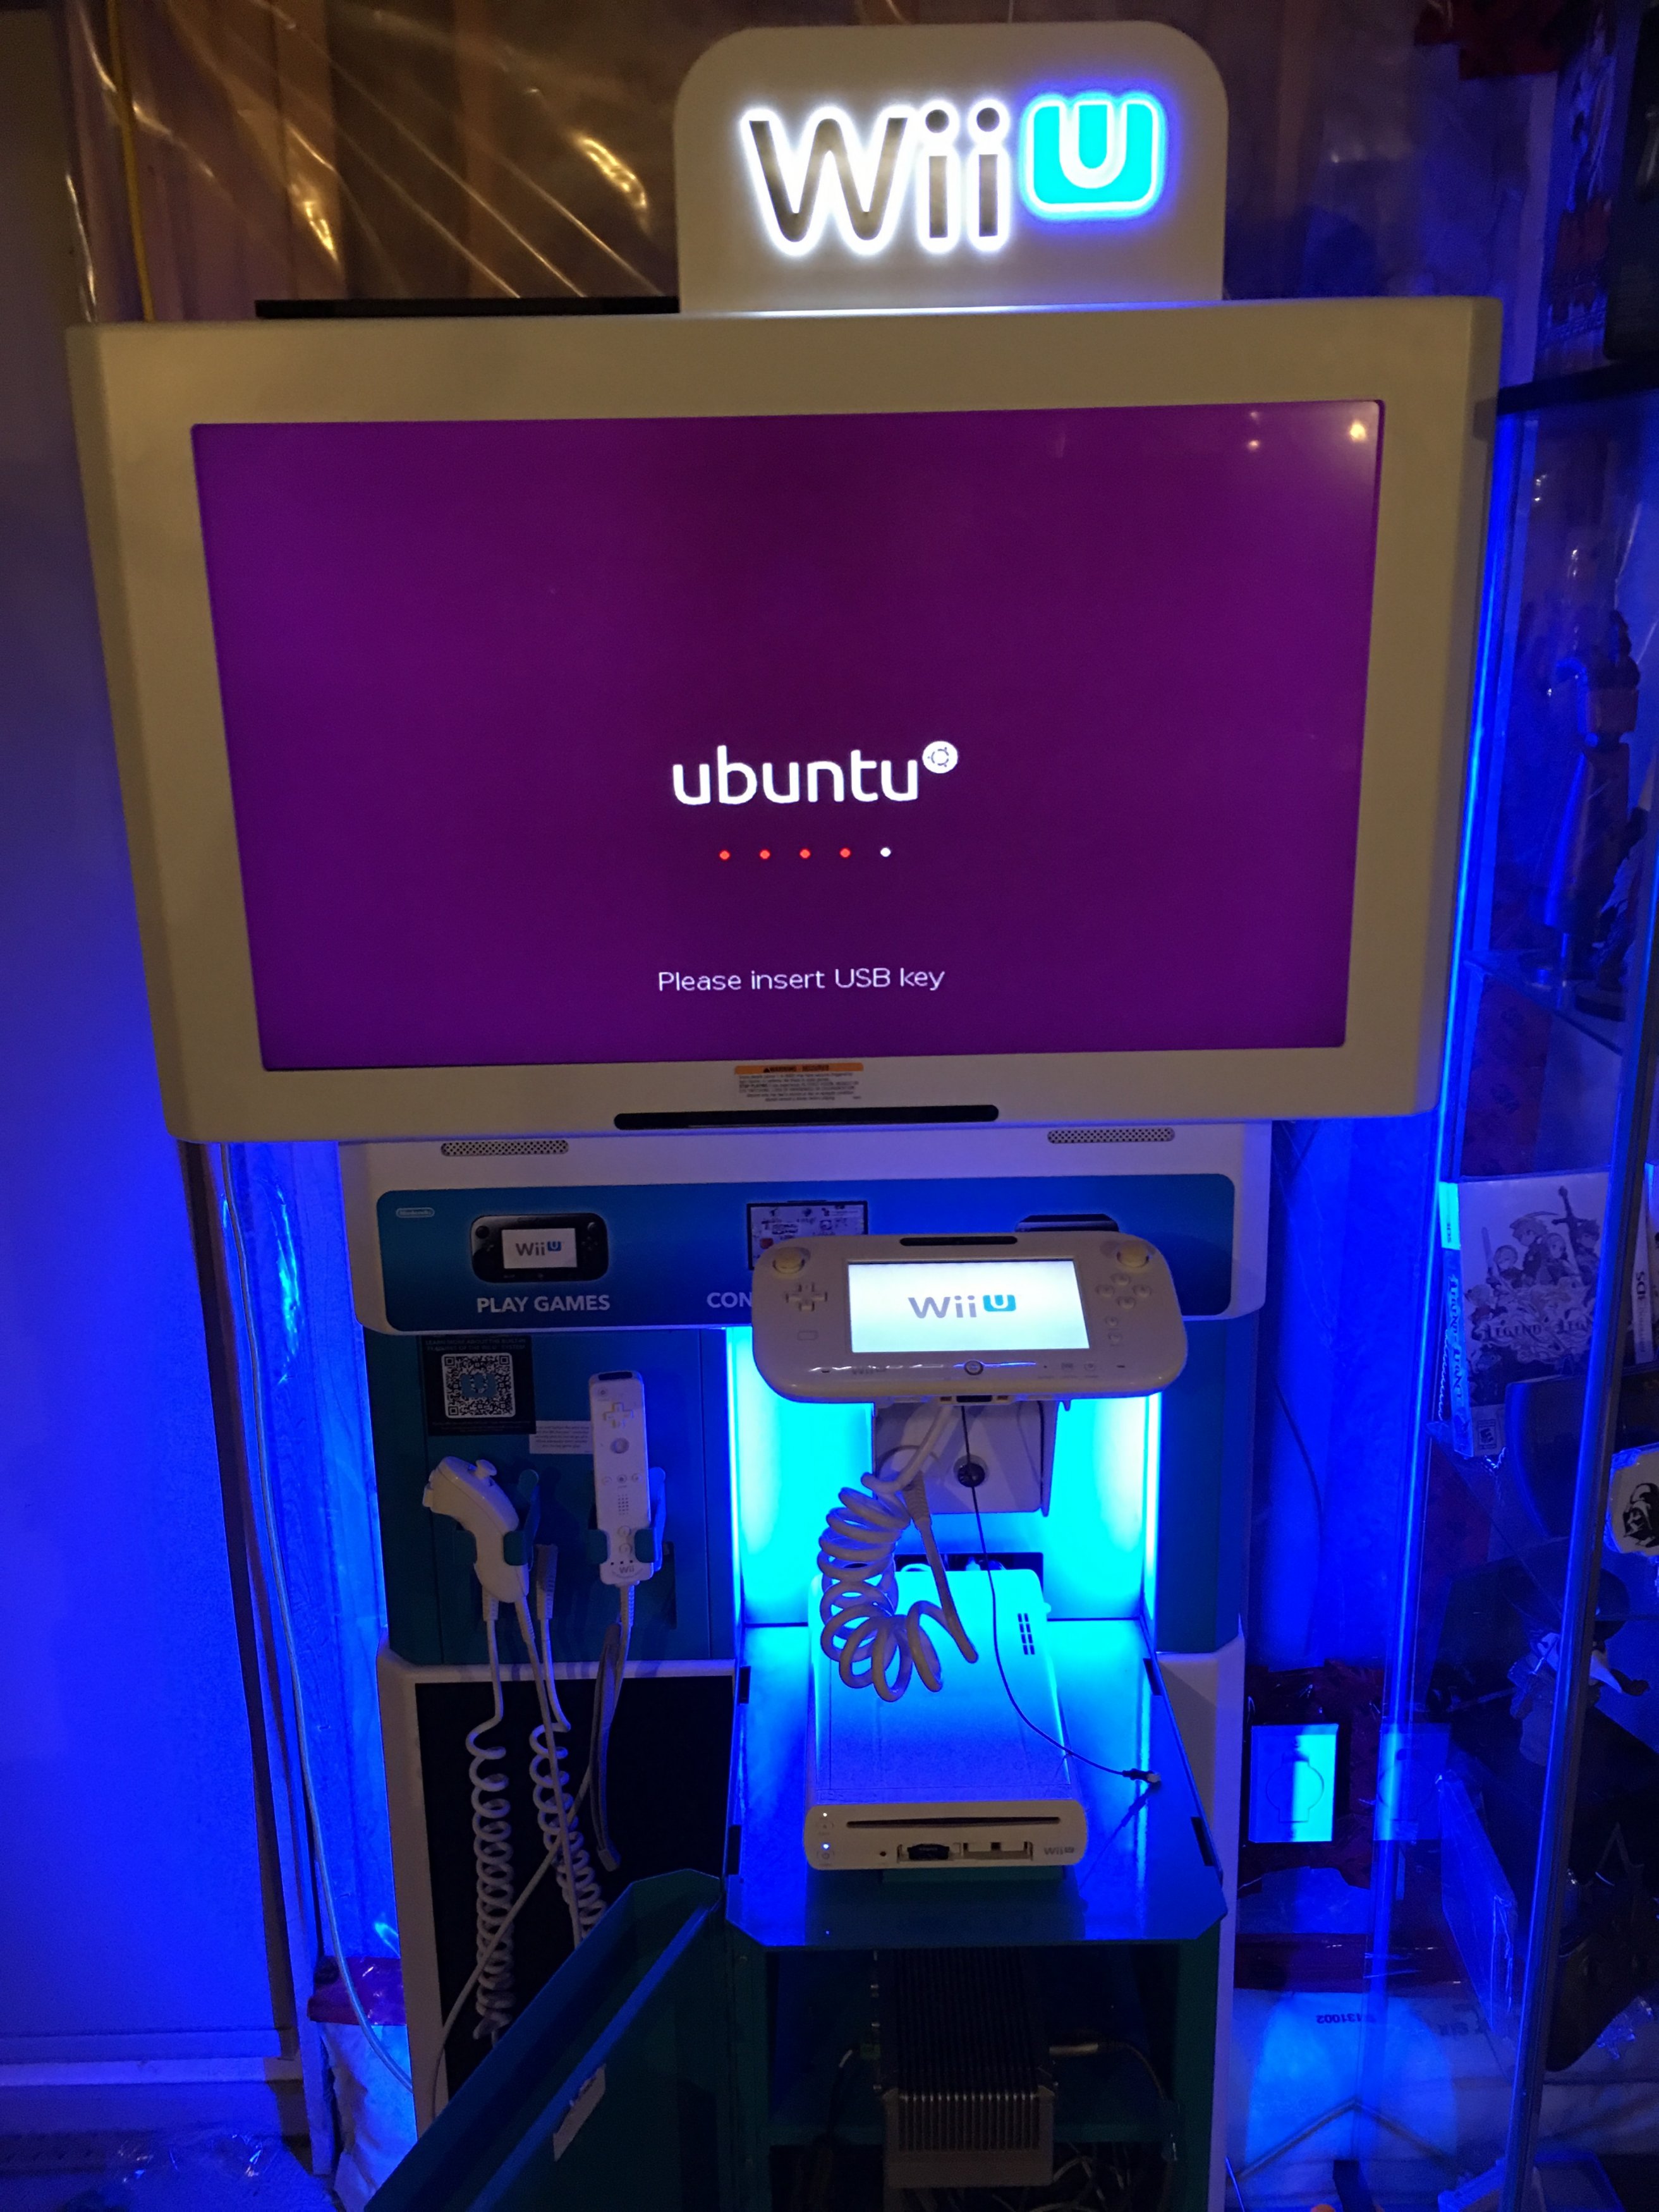 Wii U kiosk demo PC Ubuntu box | GBAtemp.net - The Independent Video Game  Community